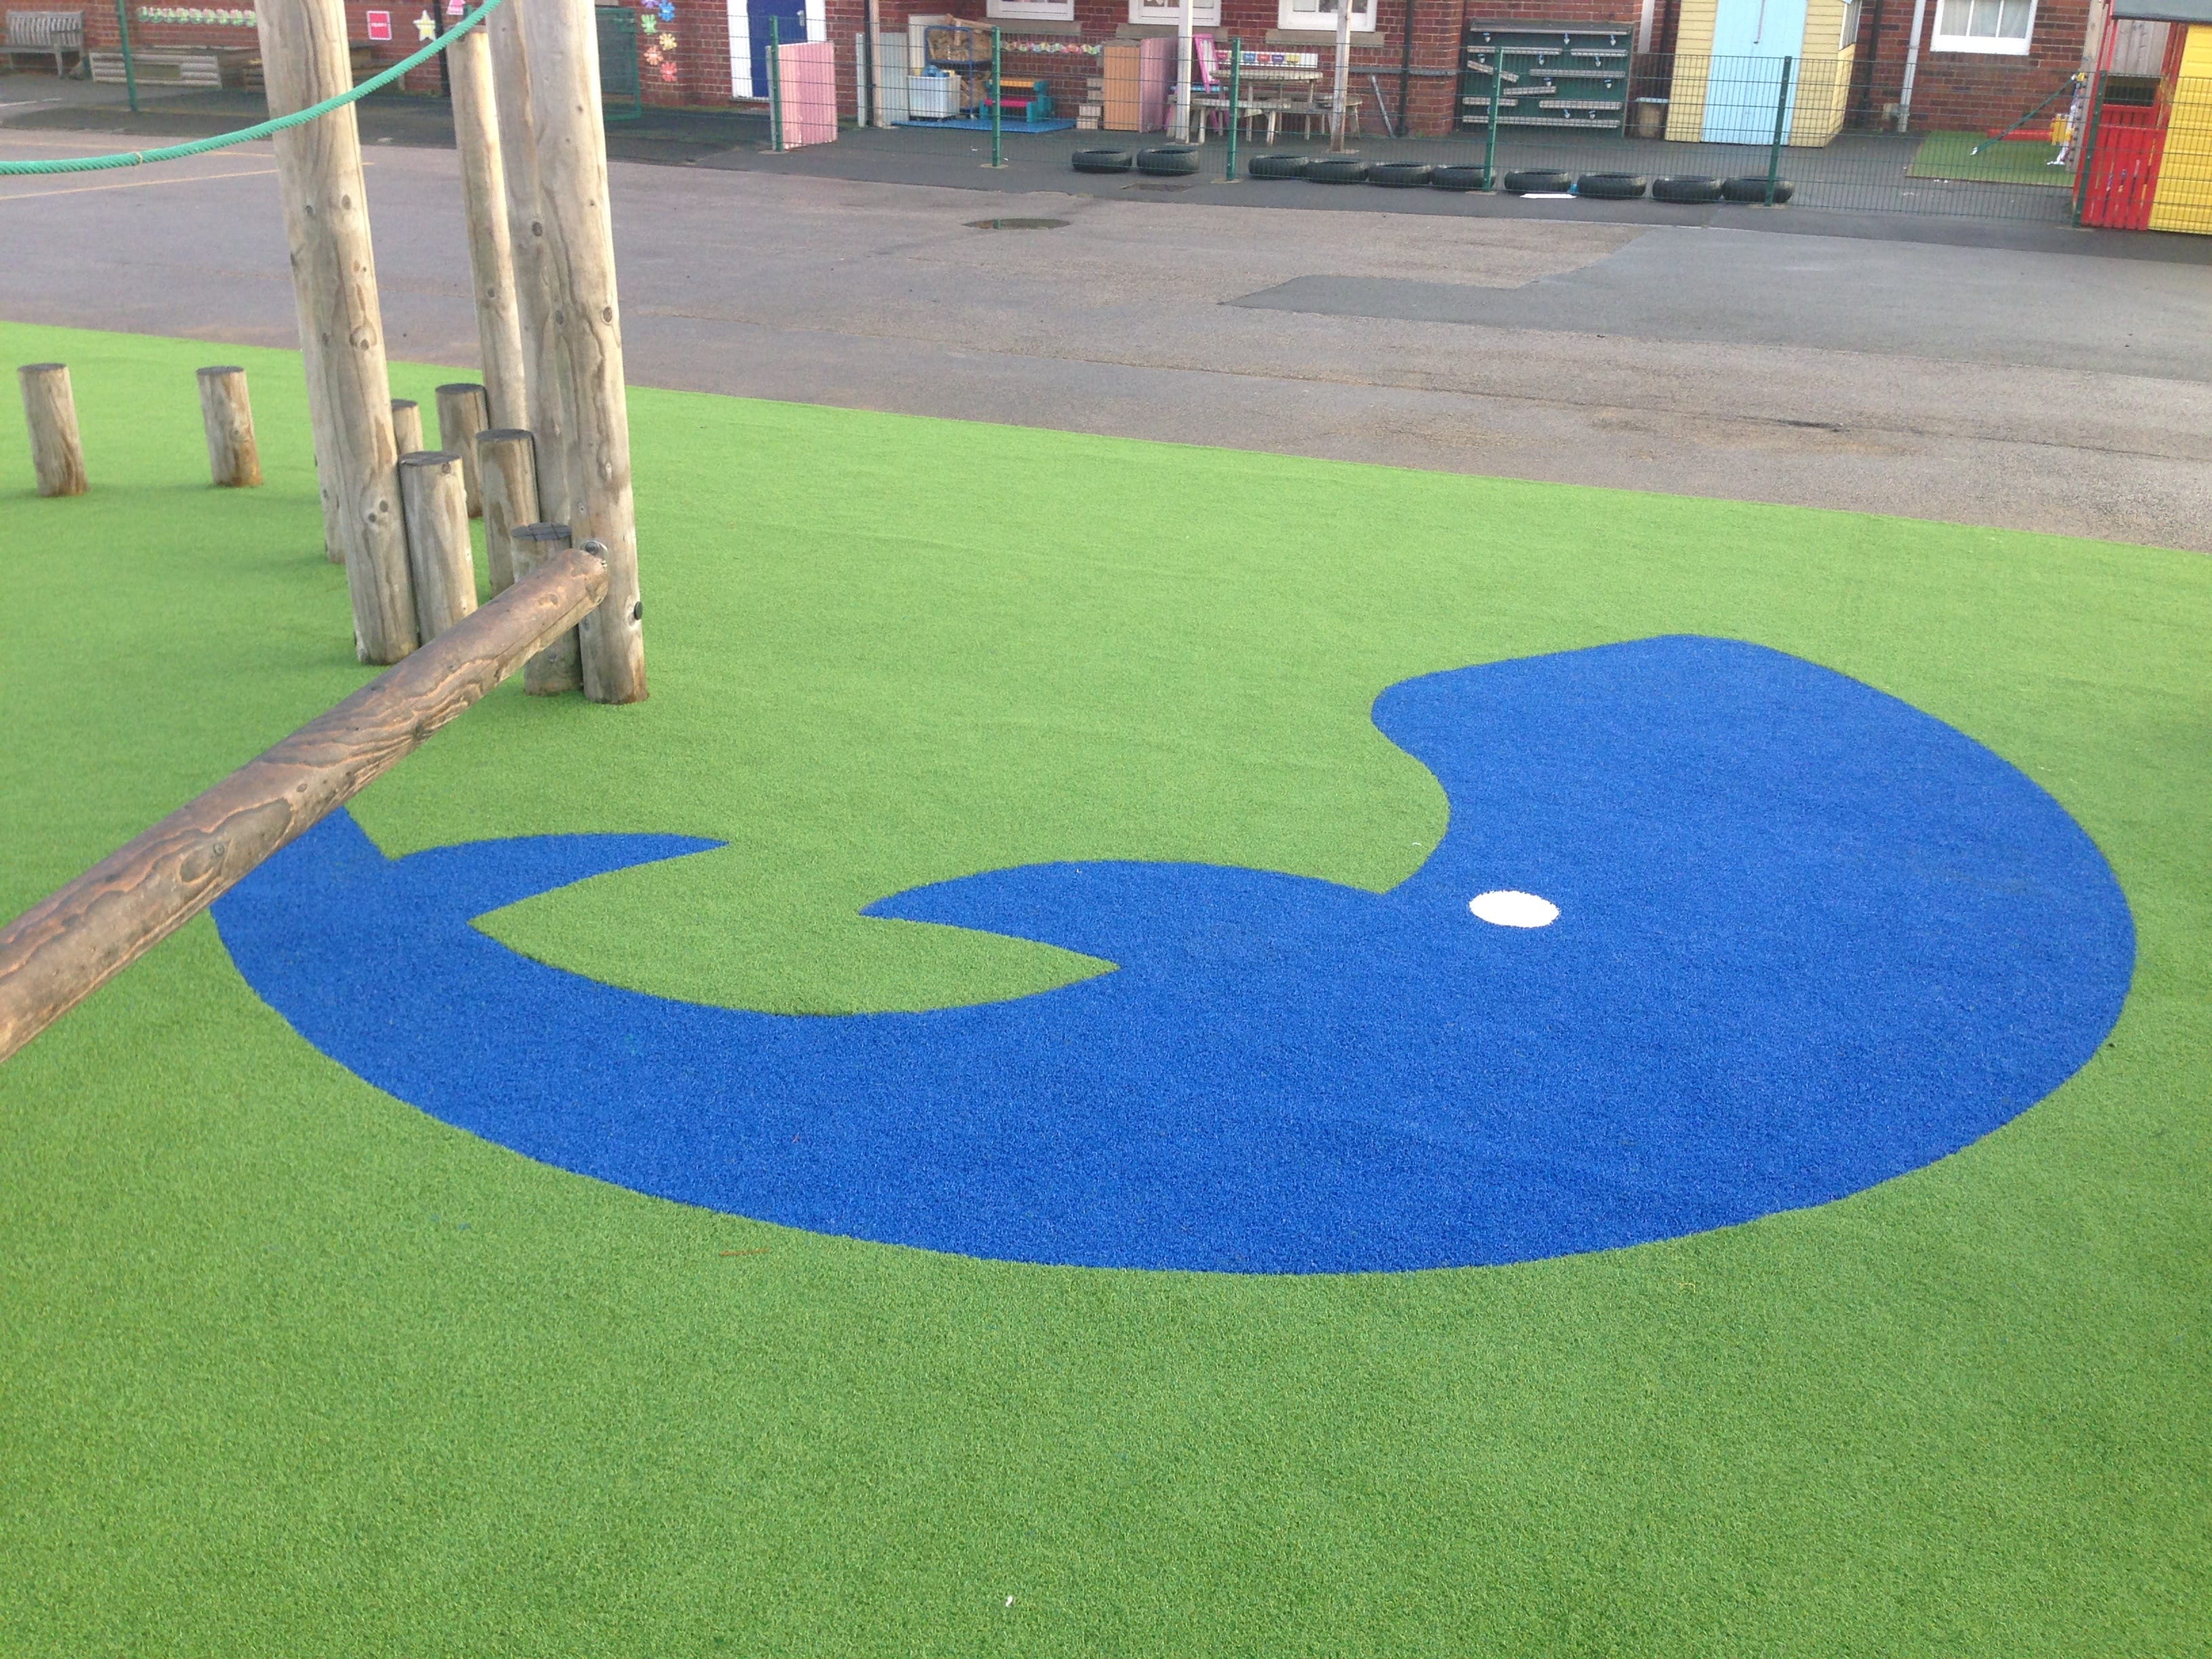 blue whale design on playground